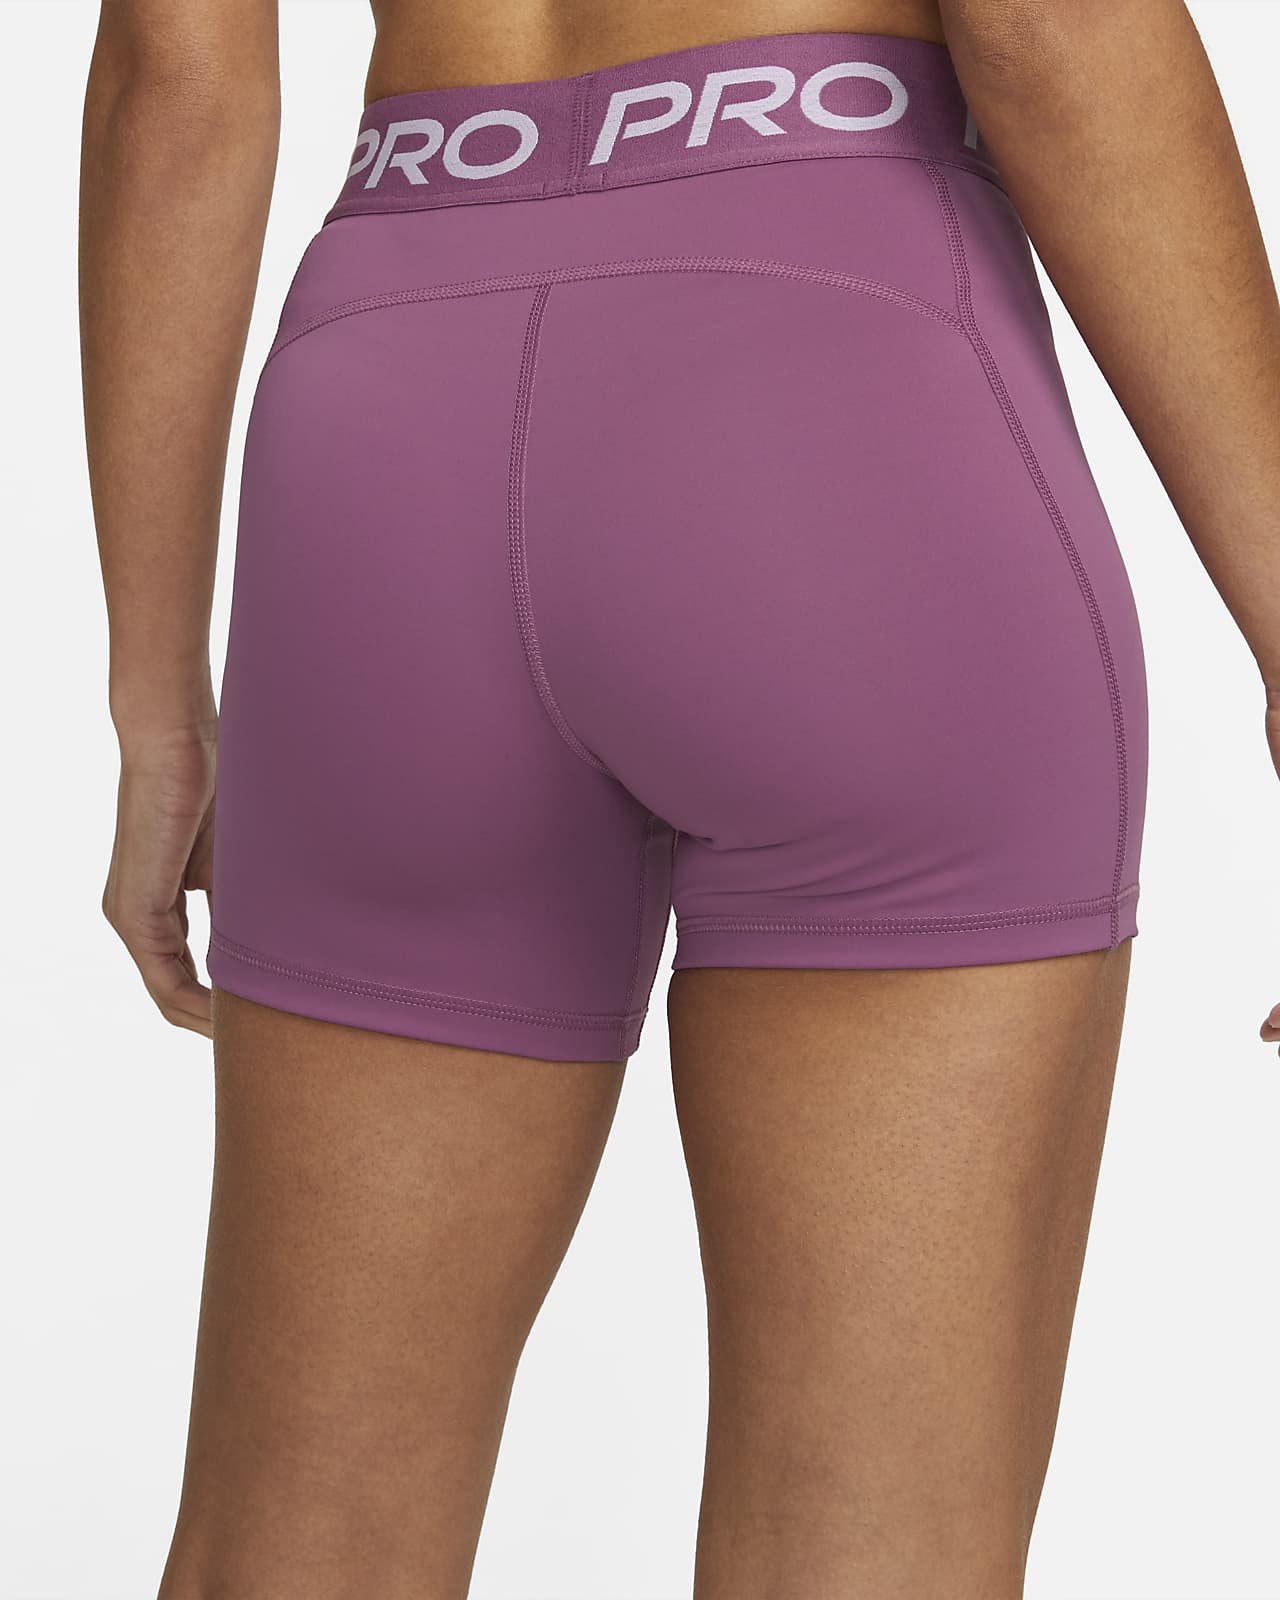 Pantalones cortos Mujer Nike Basic Pro 13 cm